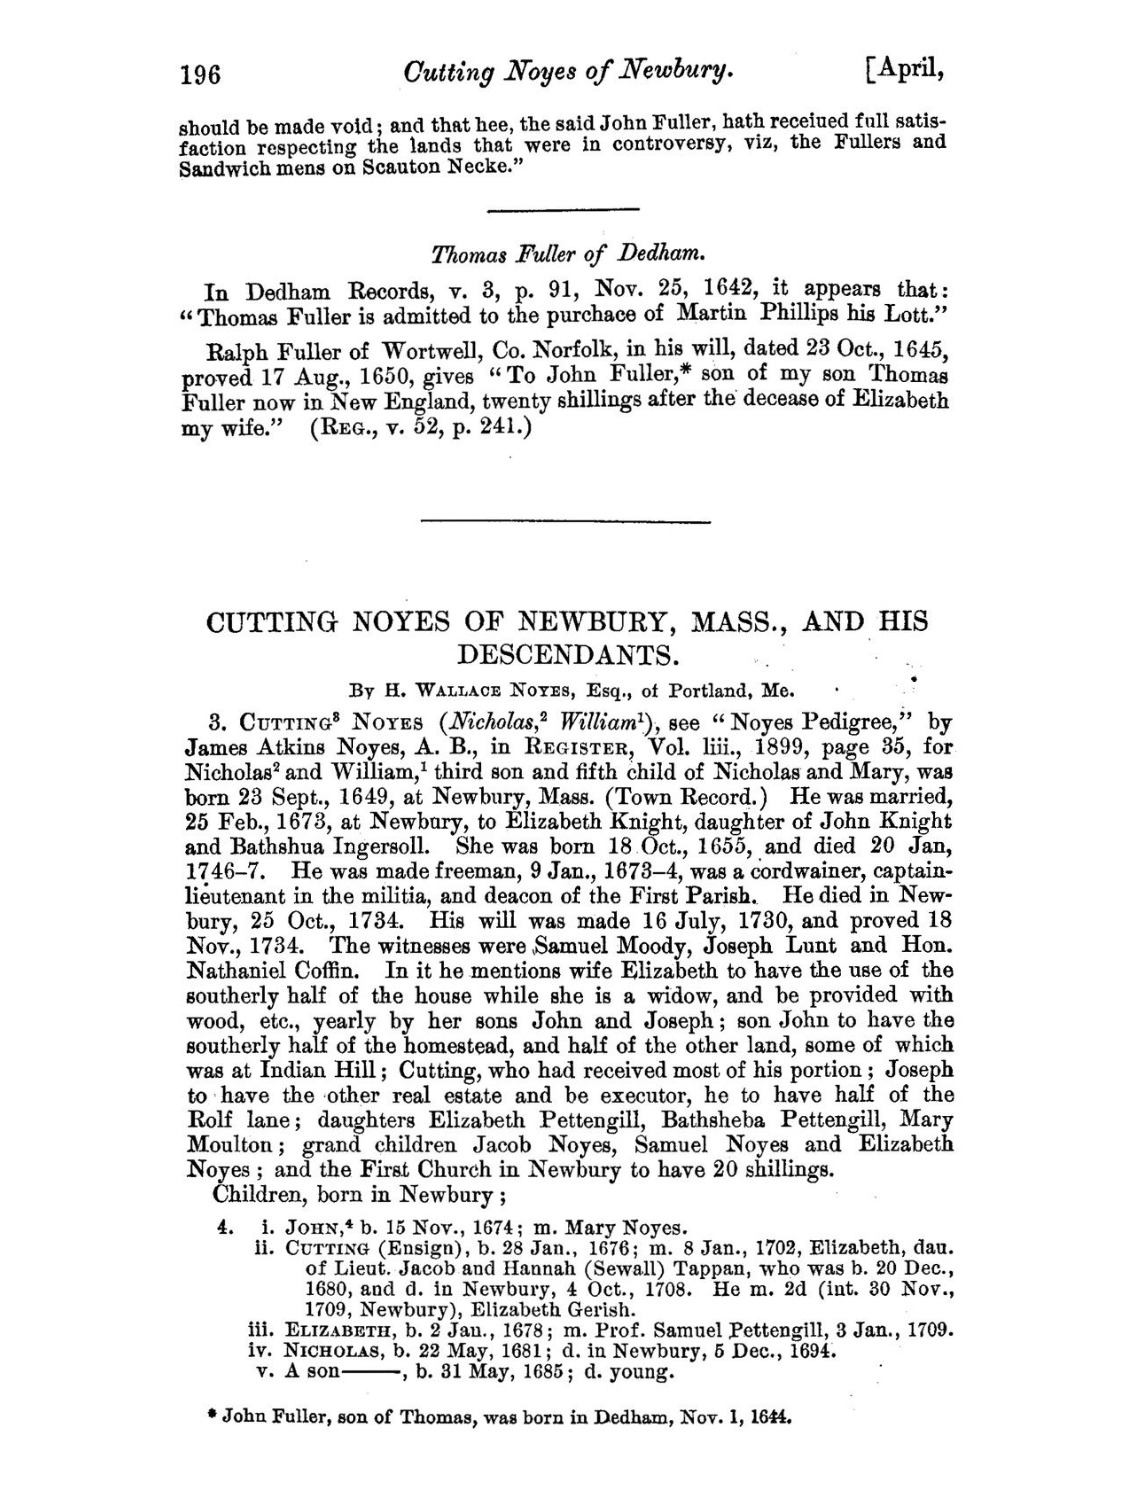 Cutting Noyes of Newbury, Mass. and His Descendants